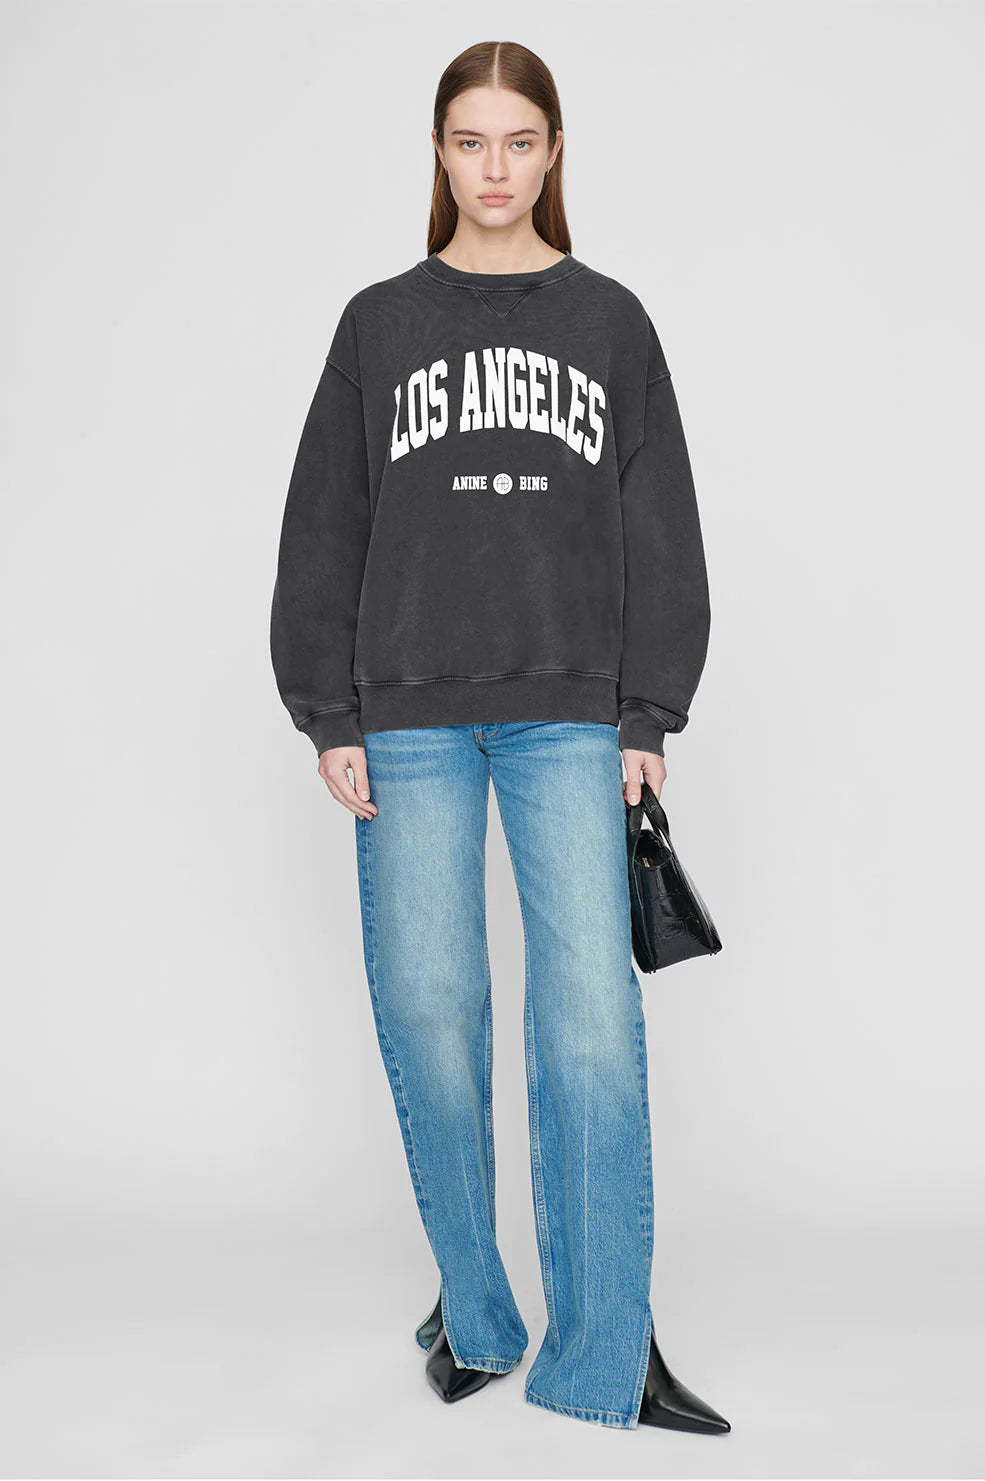 Anine Bing Ramona Sweatshirt Los Angeles - Washed Black